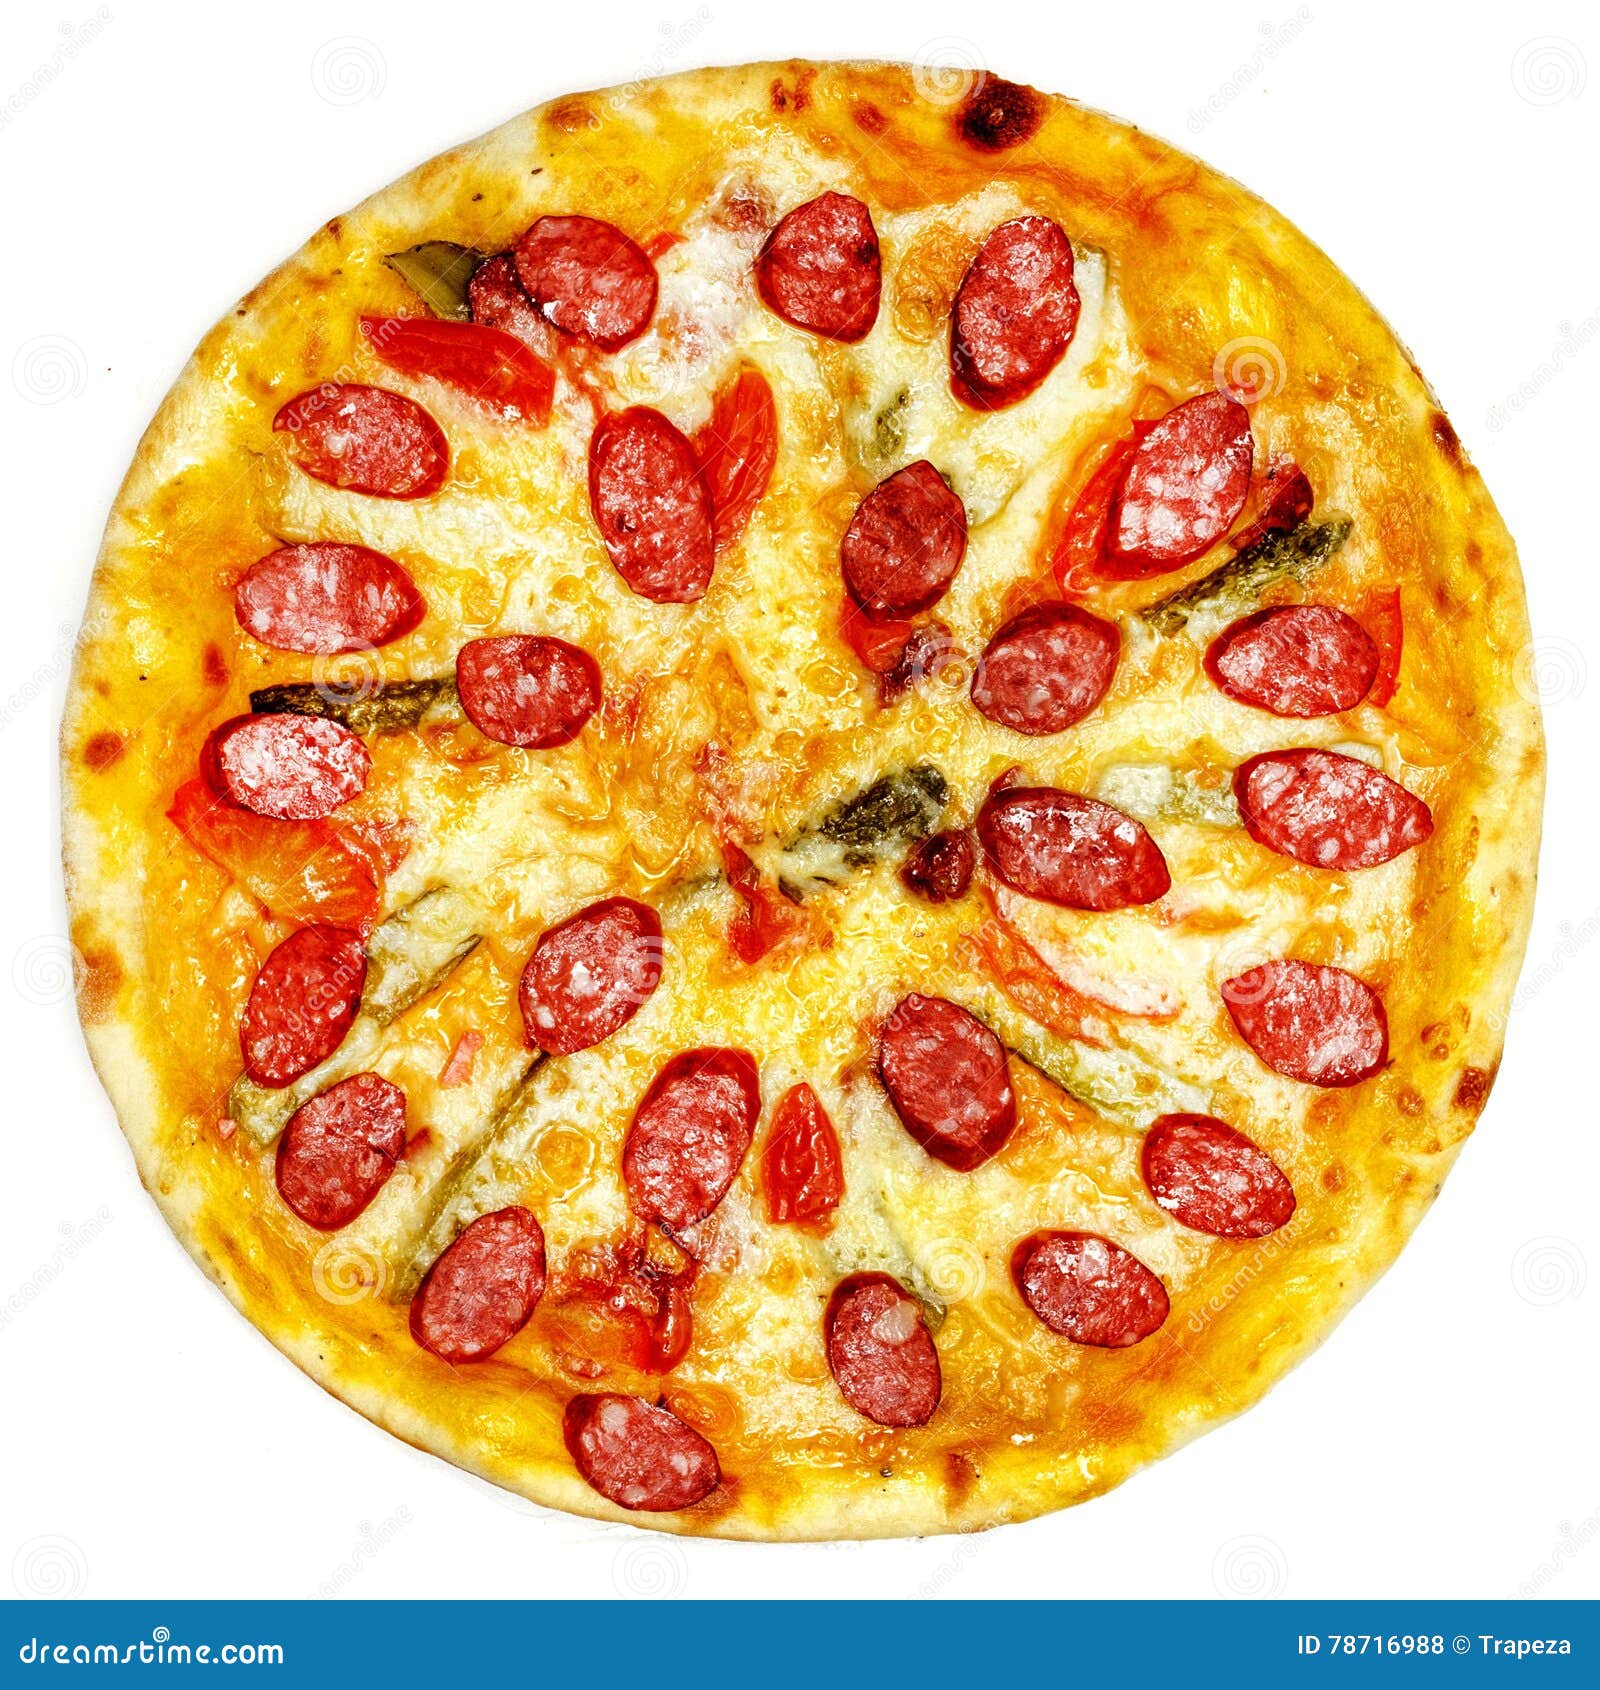 пицца грибная с помидорами фото 115